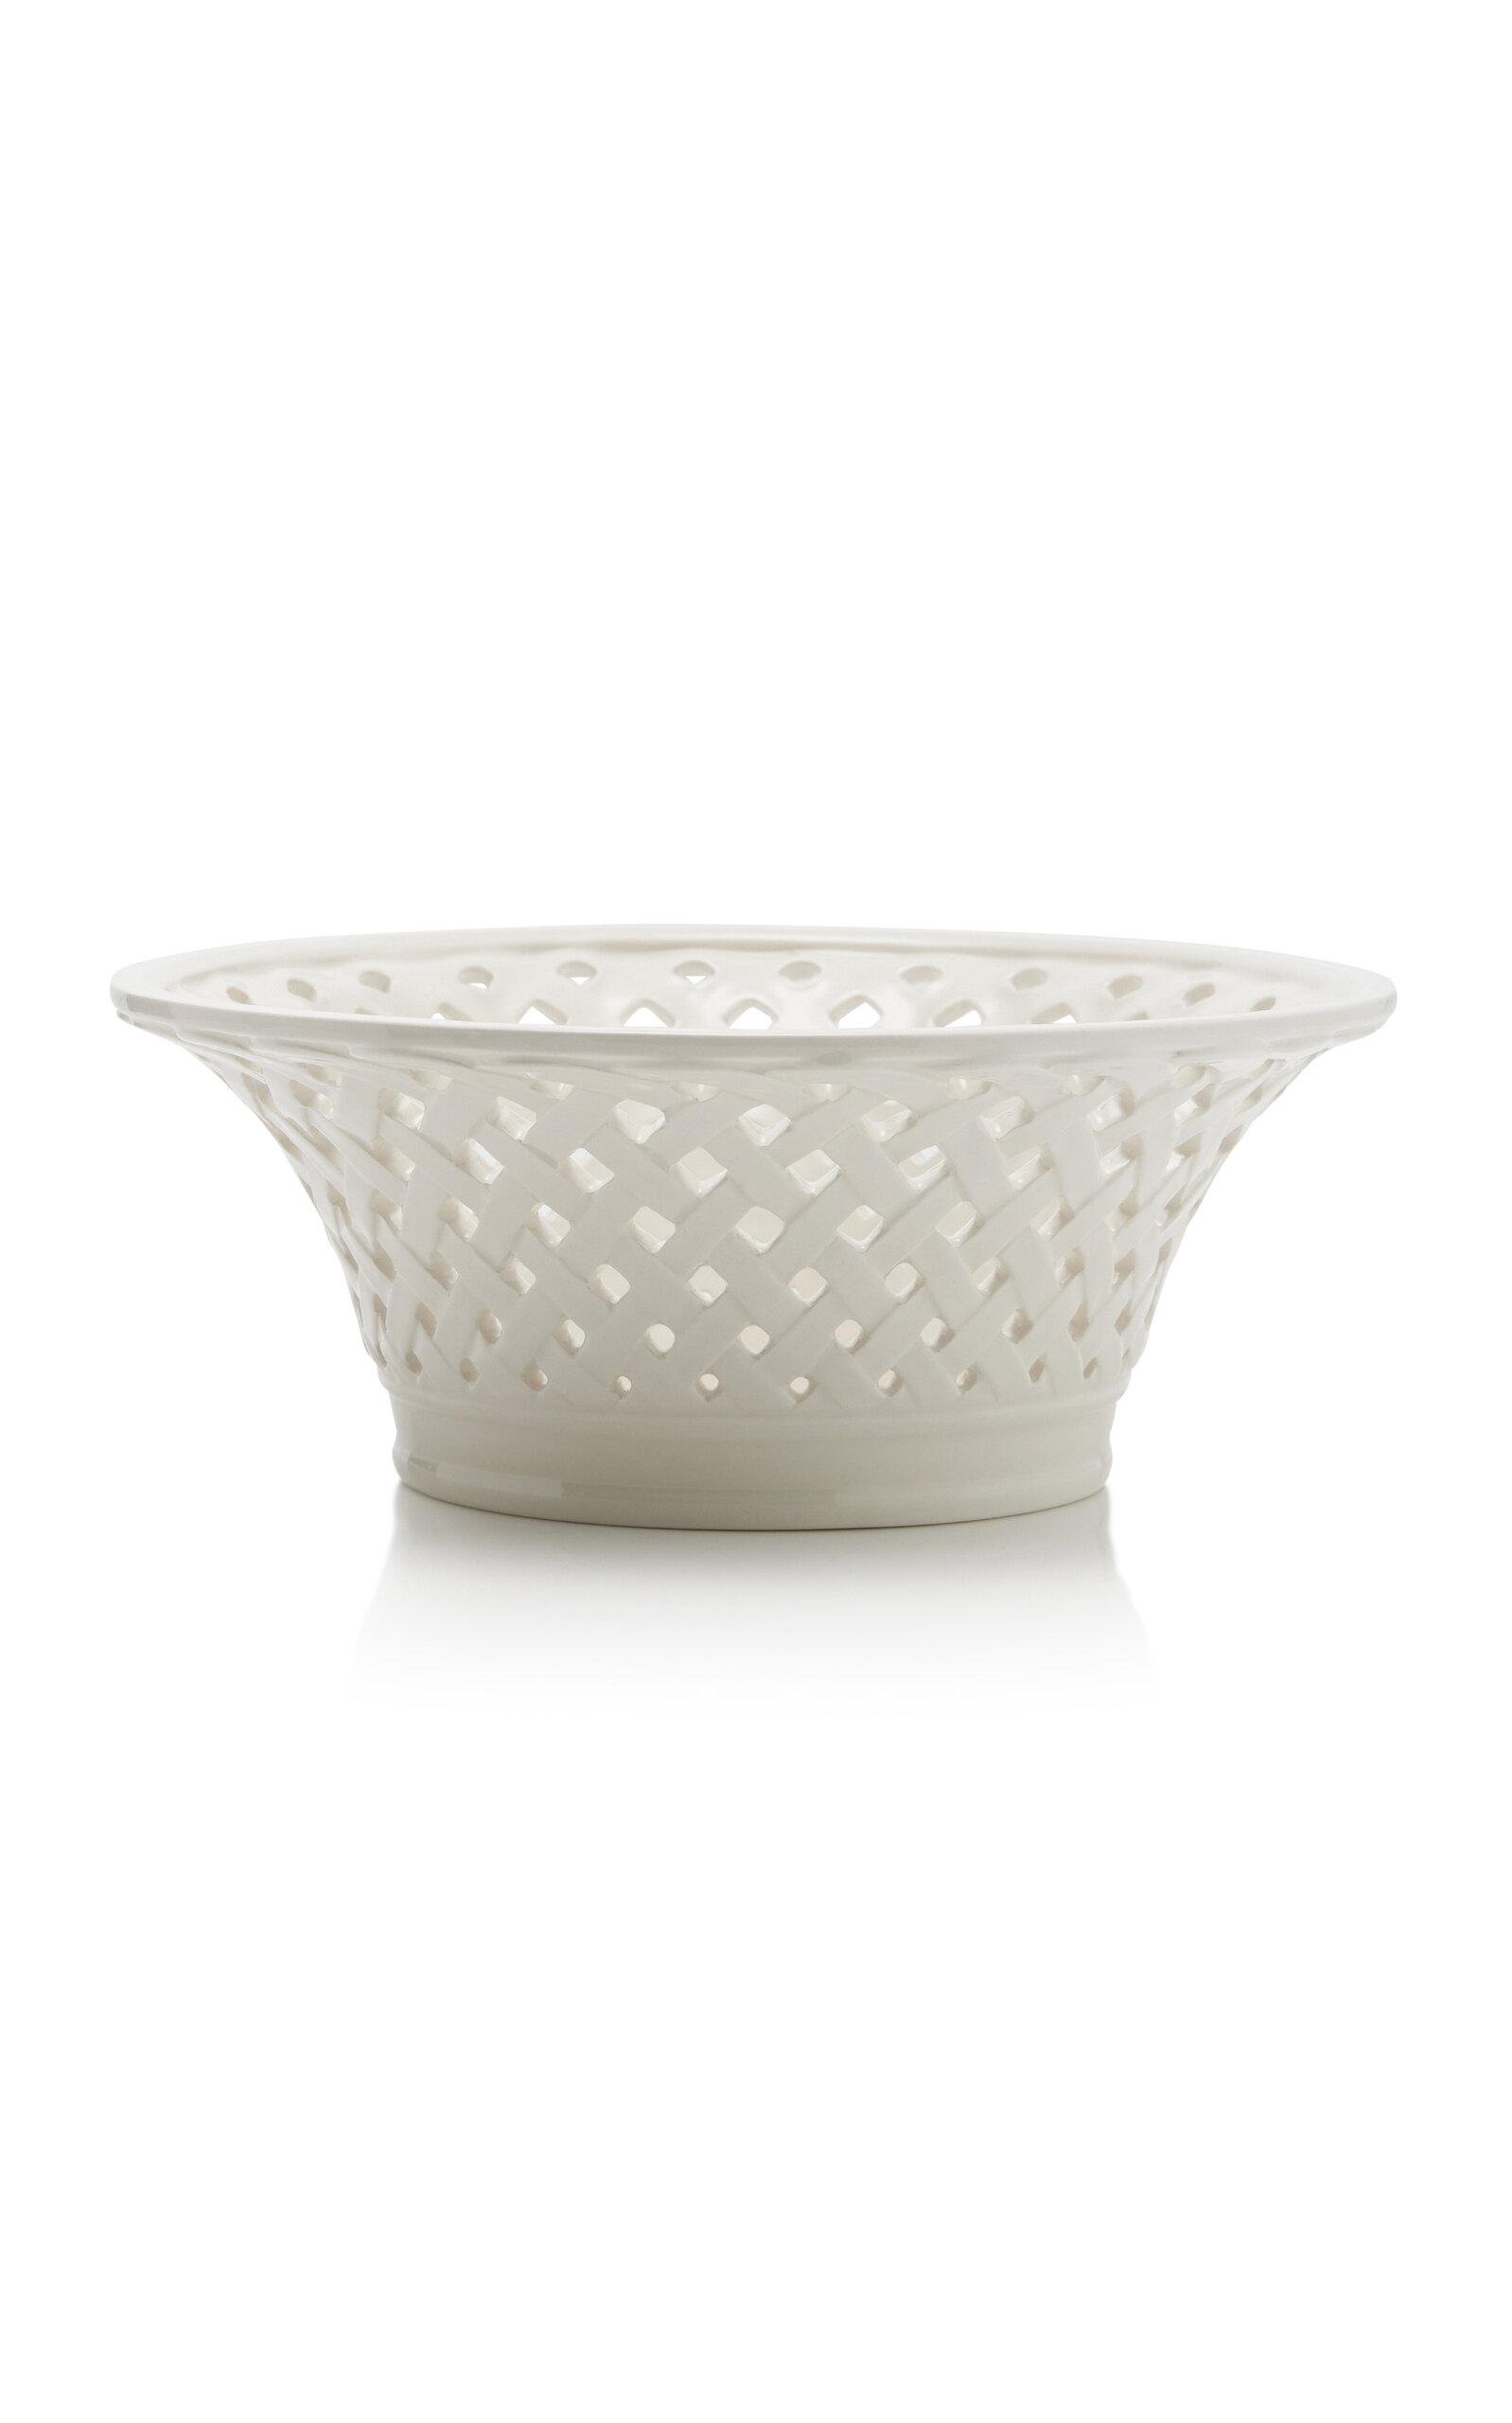 Moda Domus - Openwork Creamware Bowl - White - Moda Operandi by MODA DOMUS